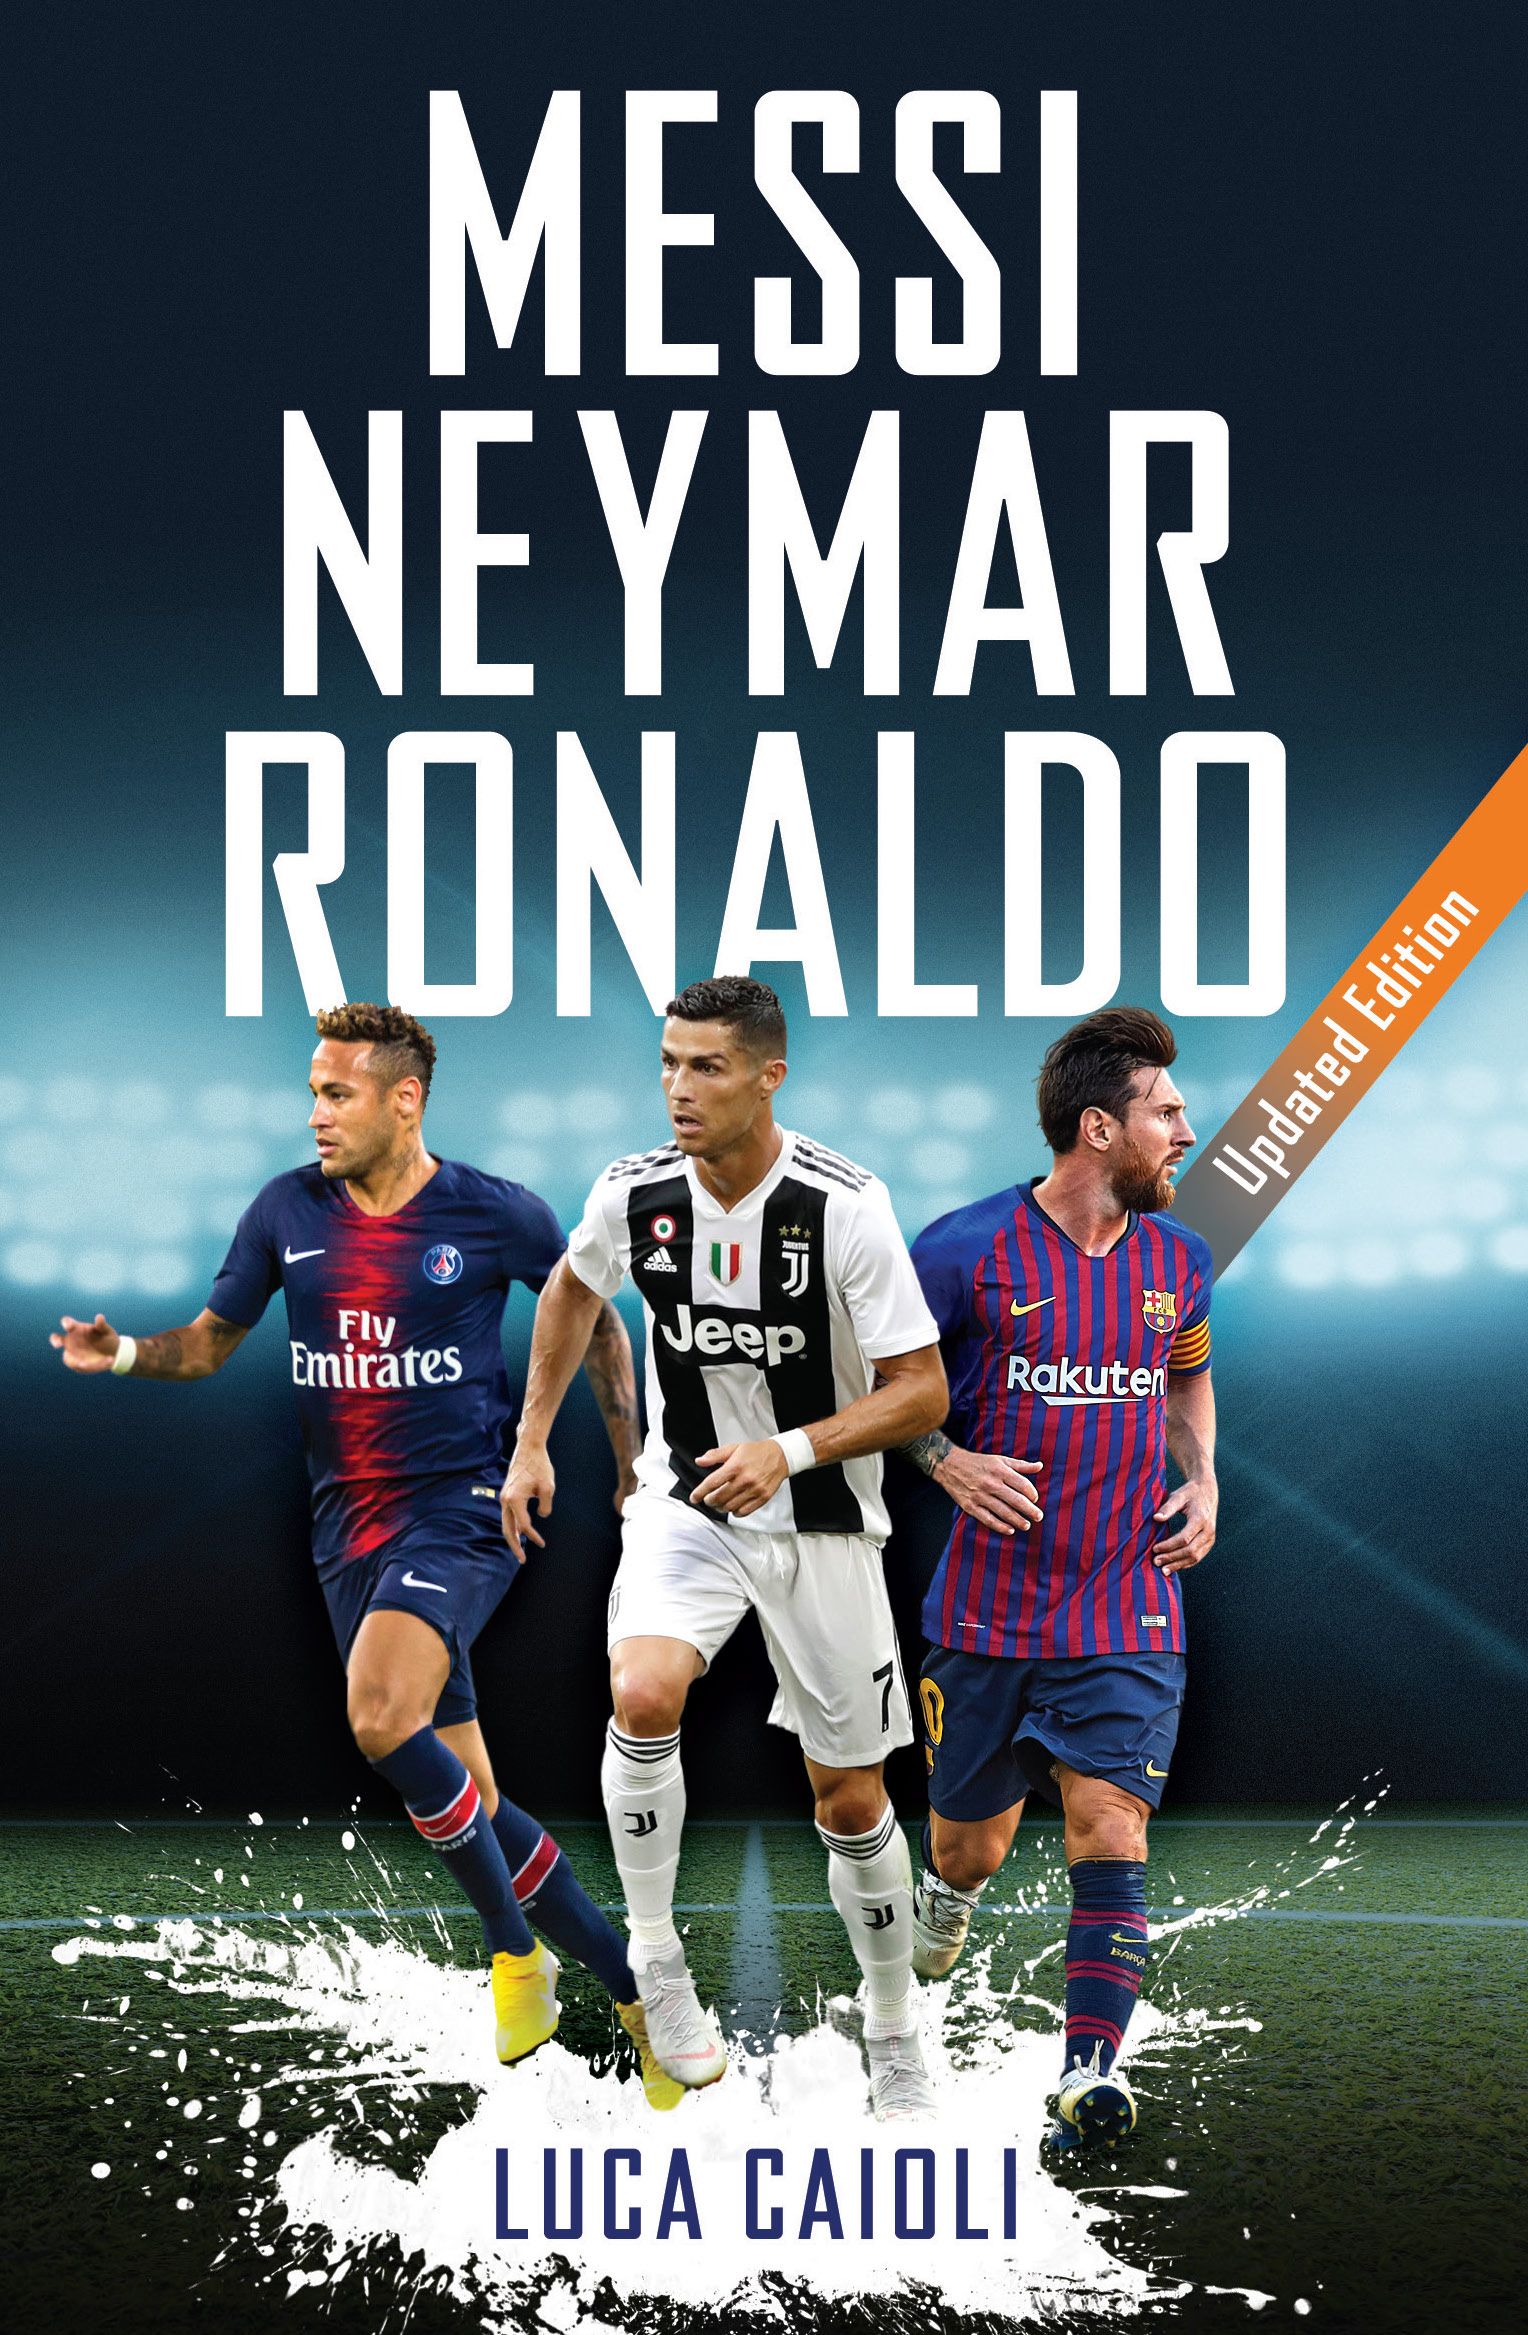 Lionel messi ronaldo and neymar Wallpapers Download